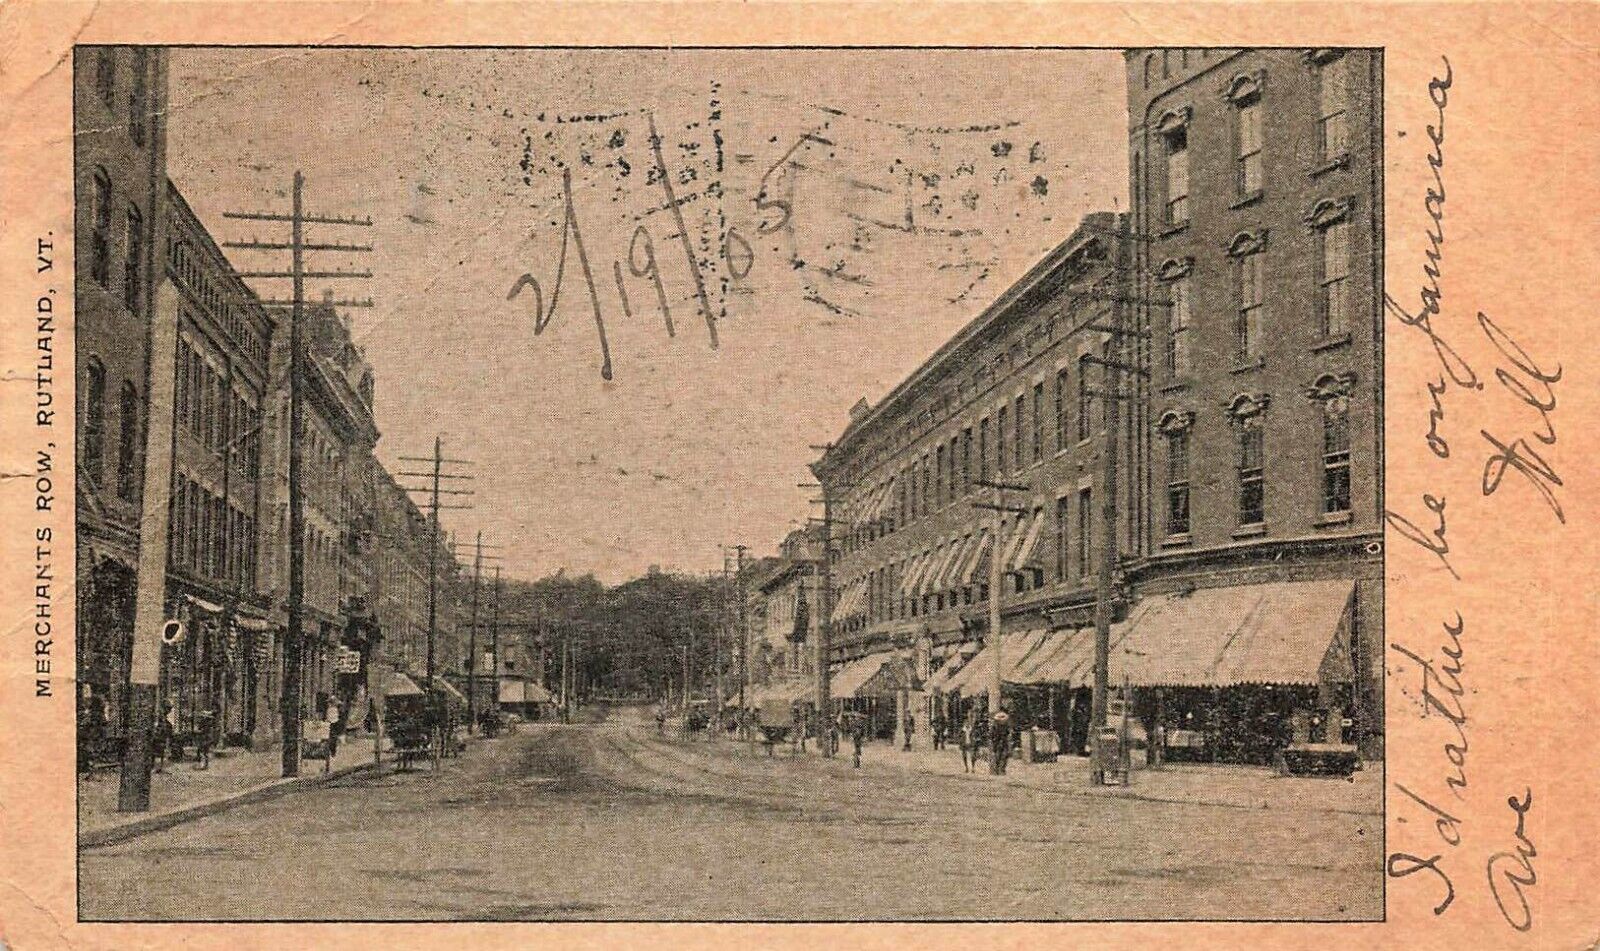 1905 VERMONT PHOTO POSTCARD: STREET VIEW OF MERCHANT ROW, RUTLAND, VT